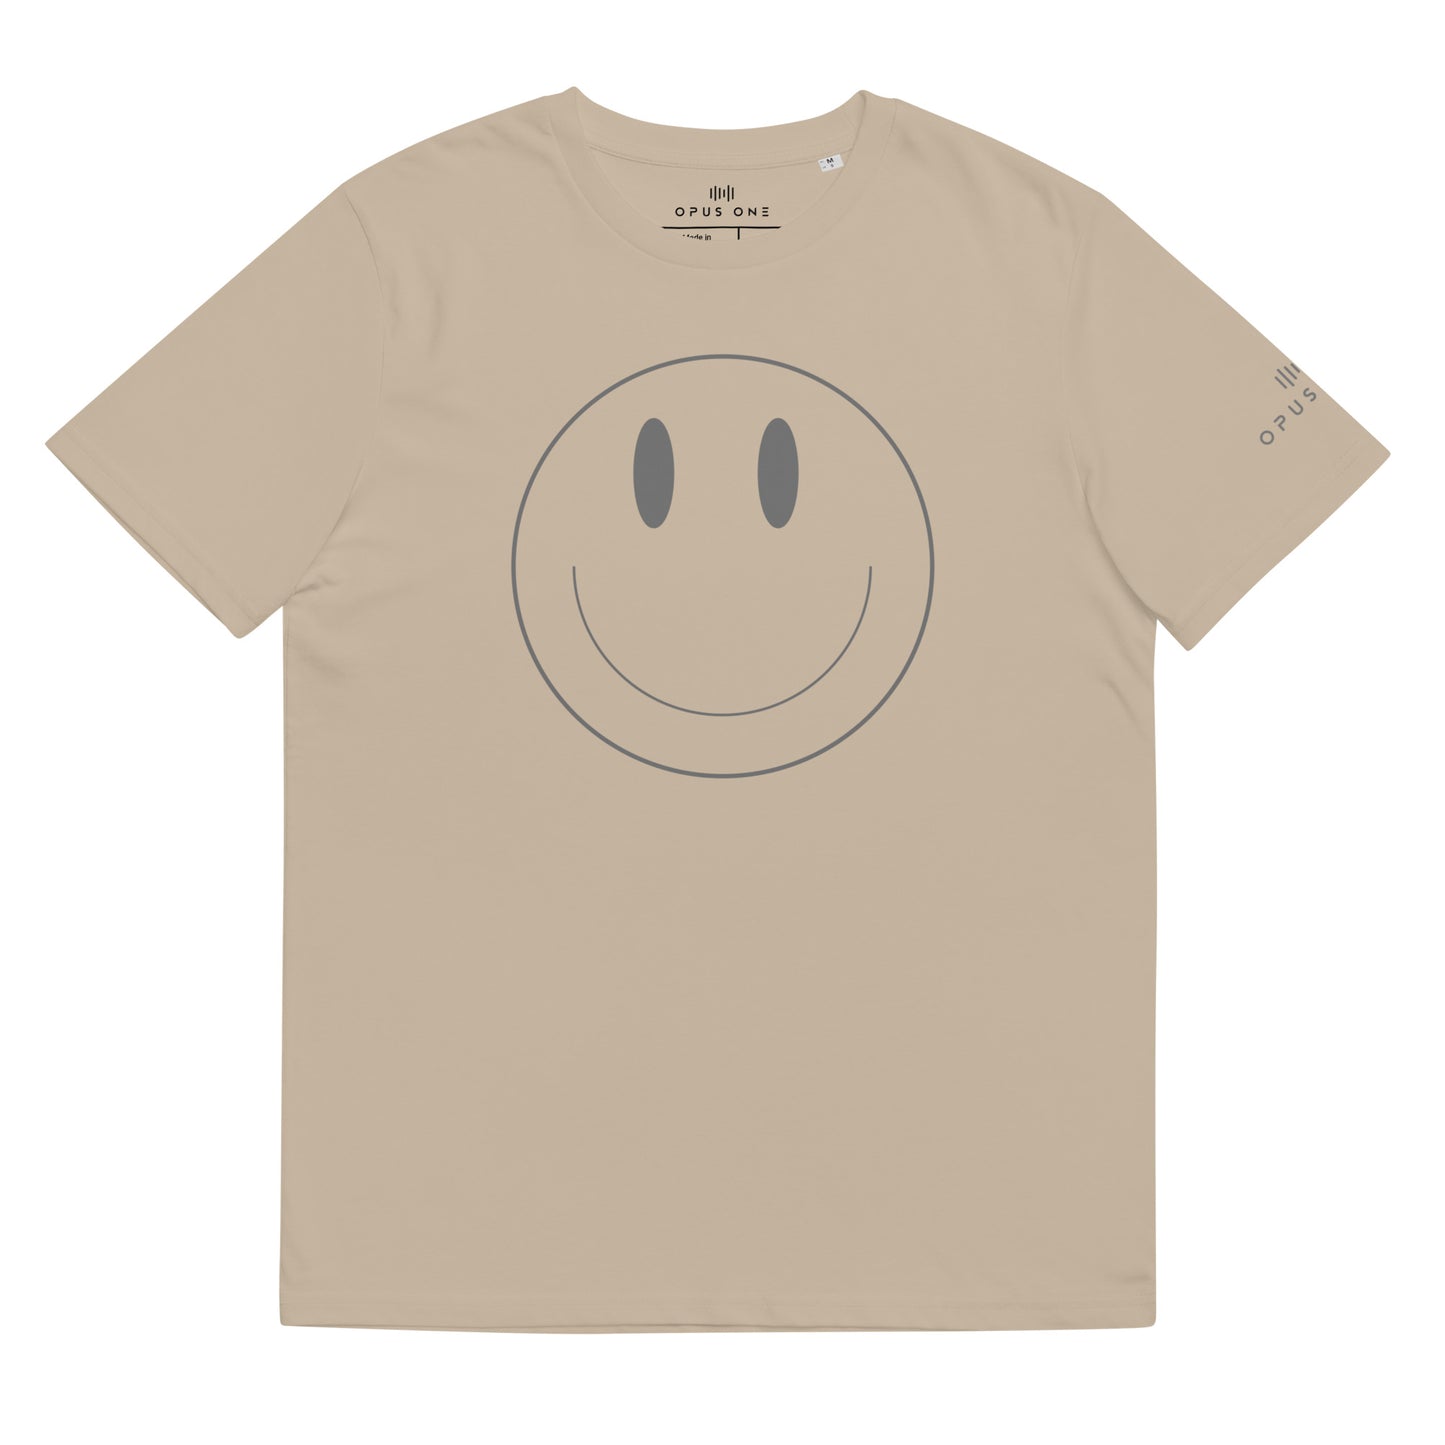 NFTM (v5 Smiley) Unisex organic cotton t-shirt (Grey Image)